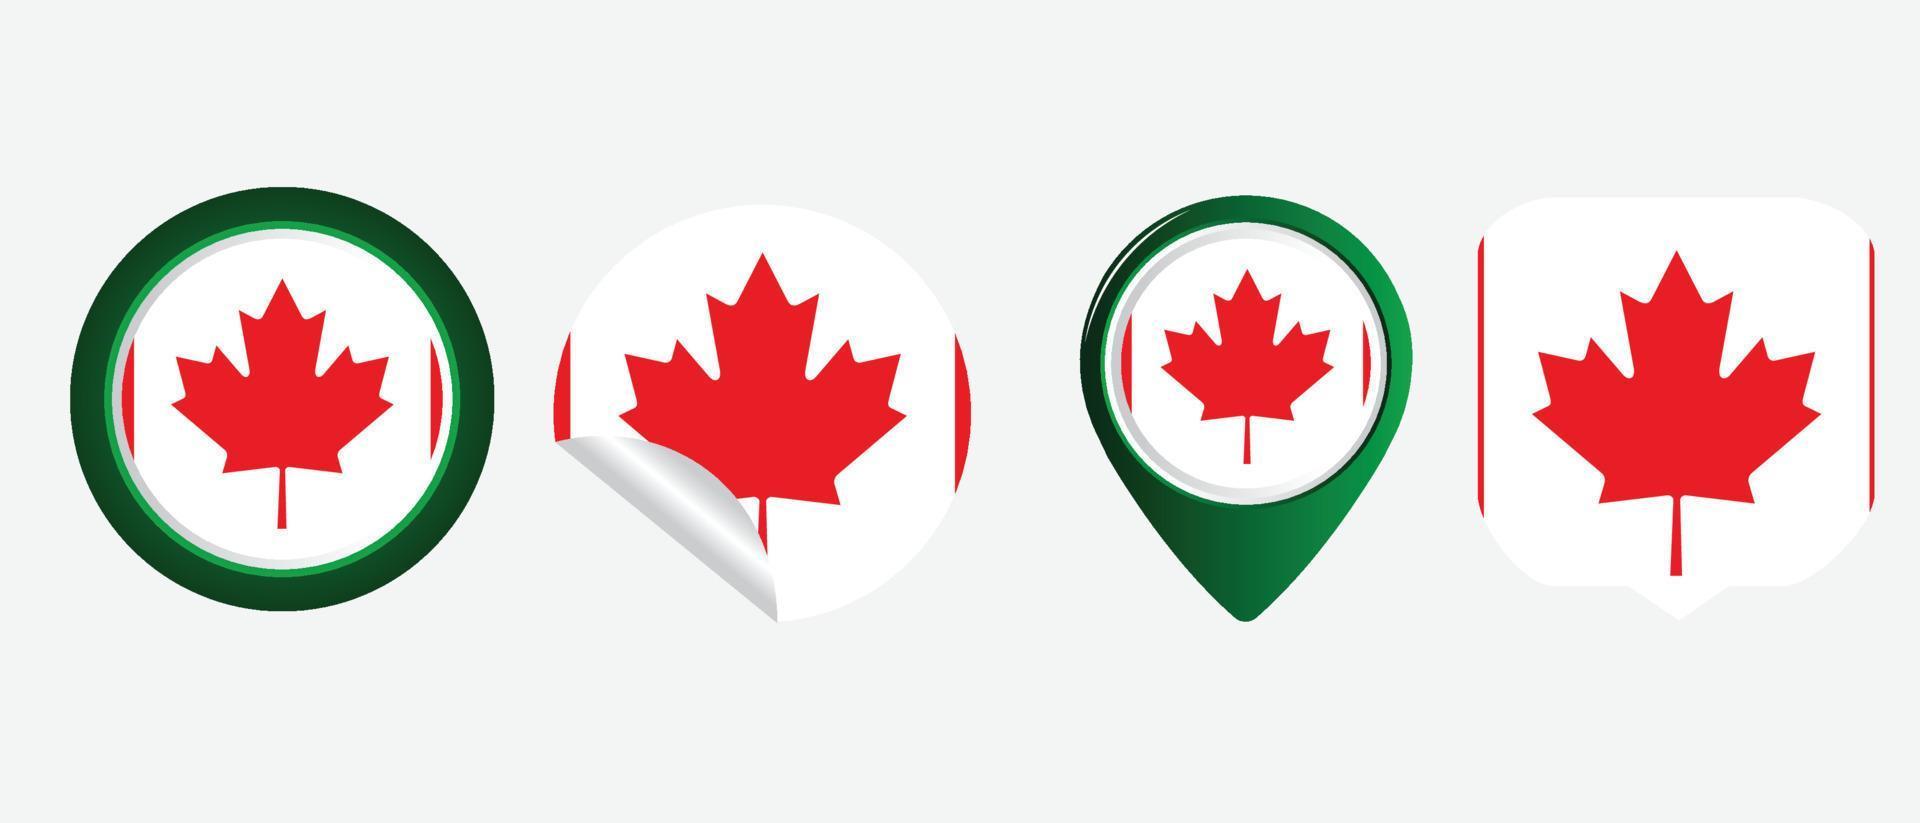 Canada flag. flat icon symbol vector illustration